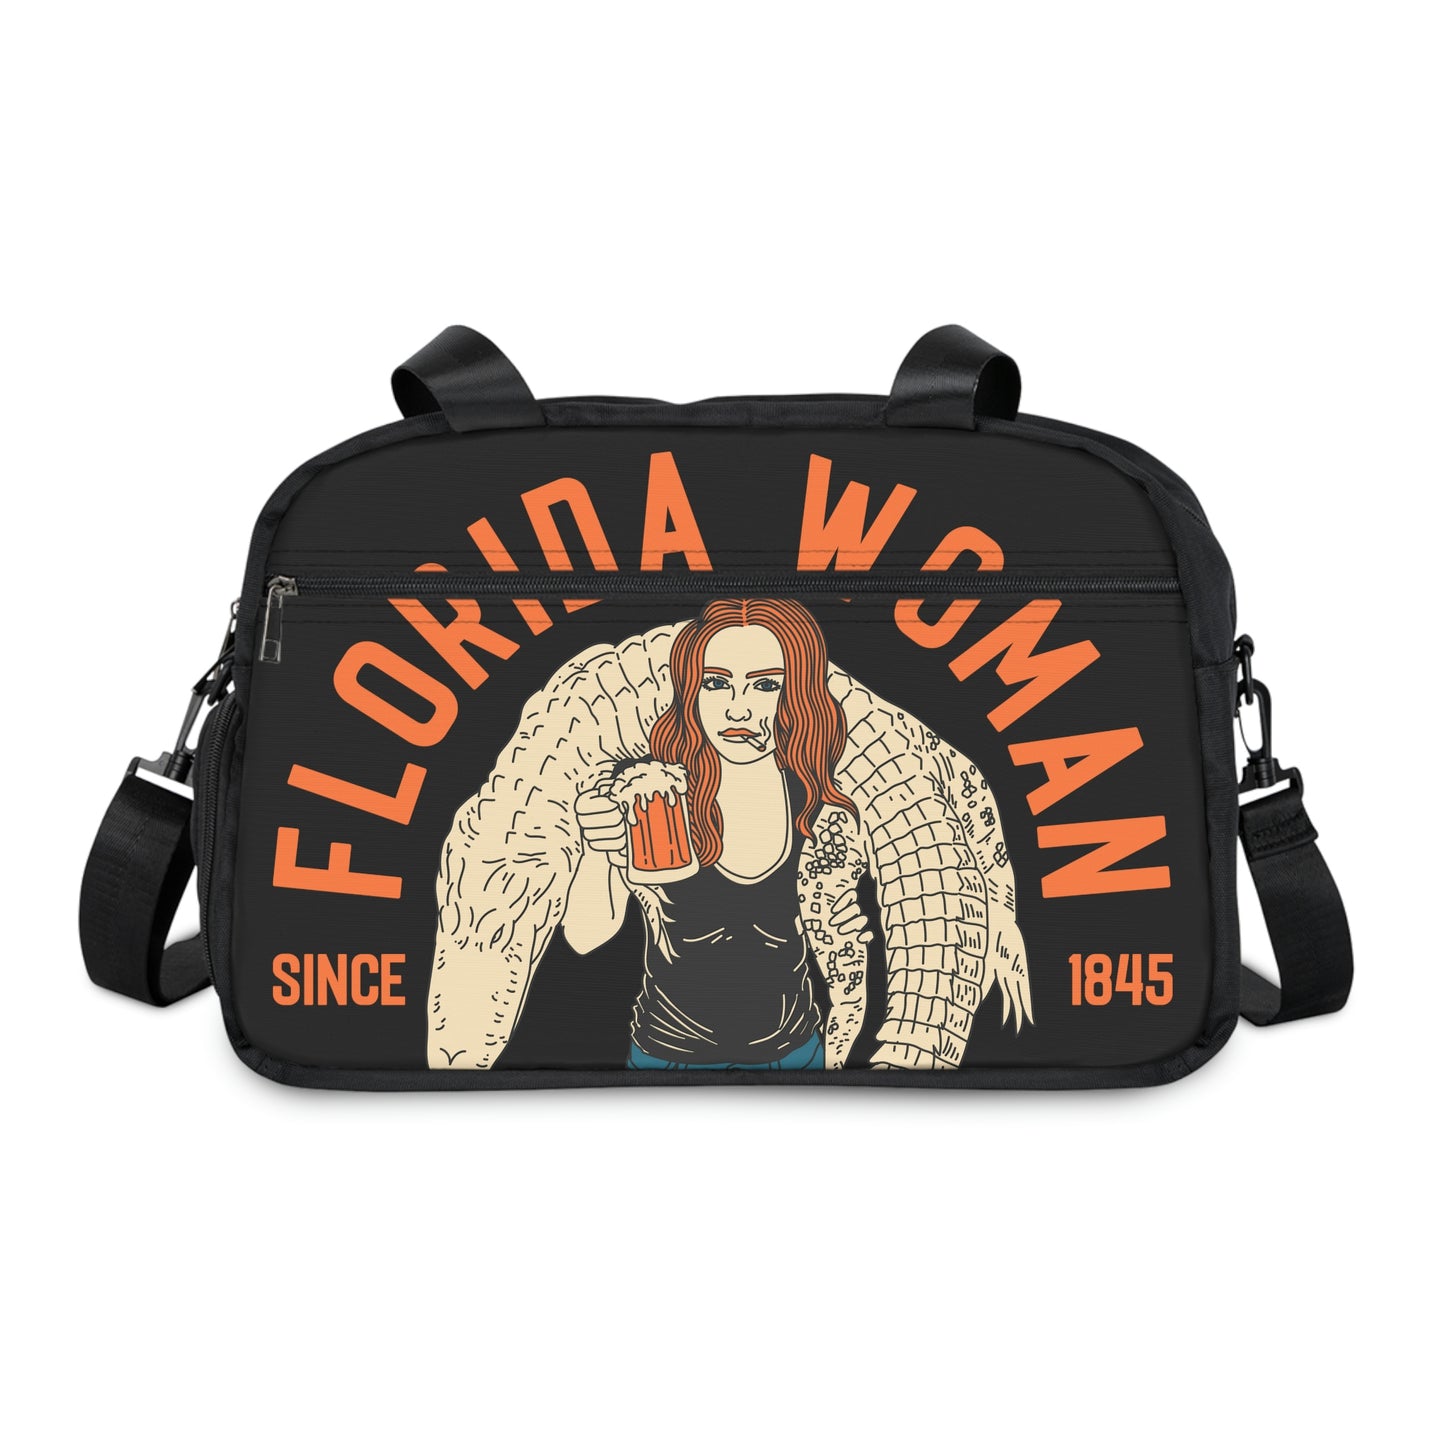 Florida Woman - Alligator - Fitness Bag